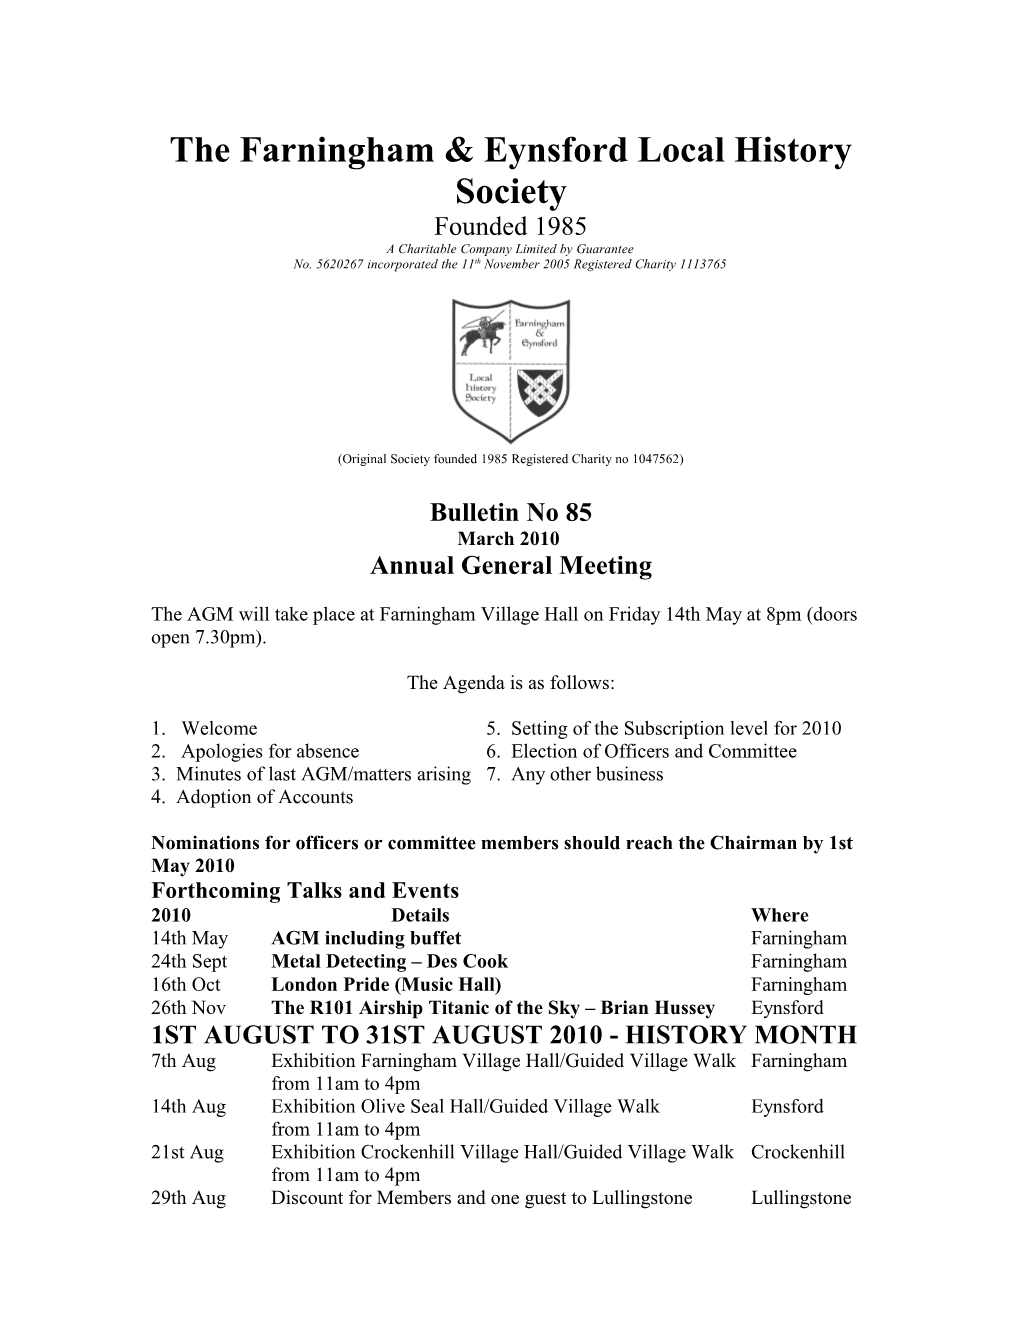 The Farningham & Eynsford Local History Society